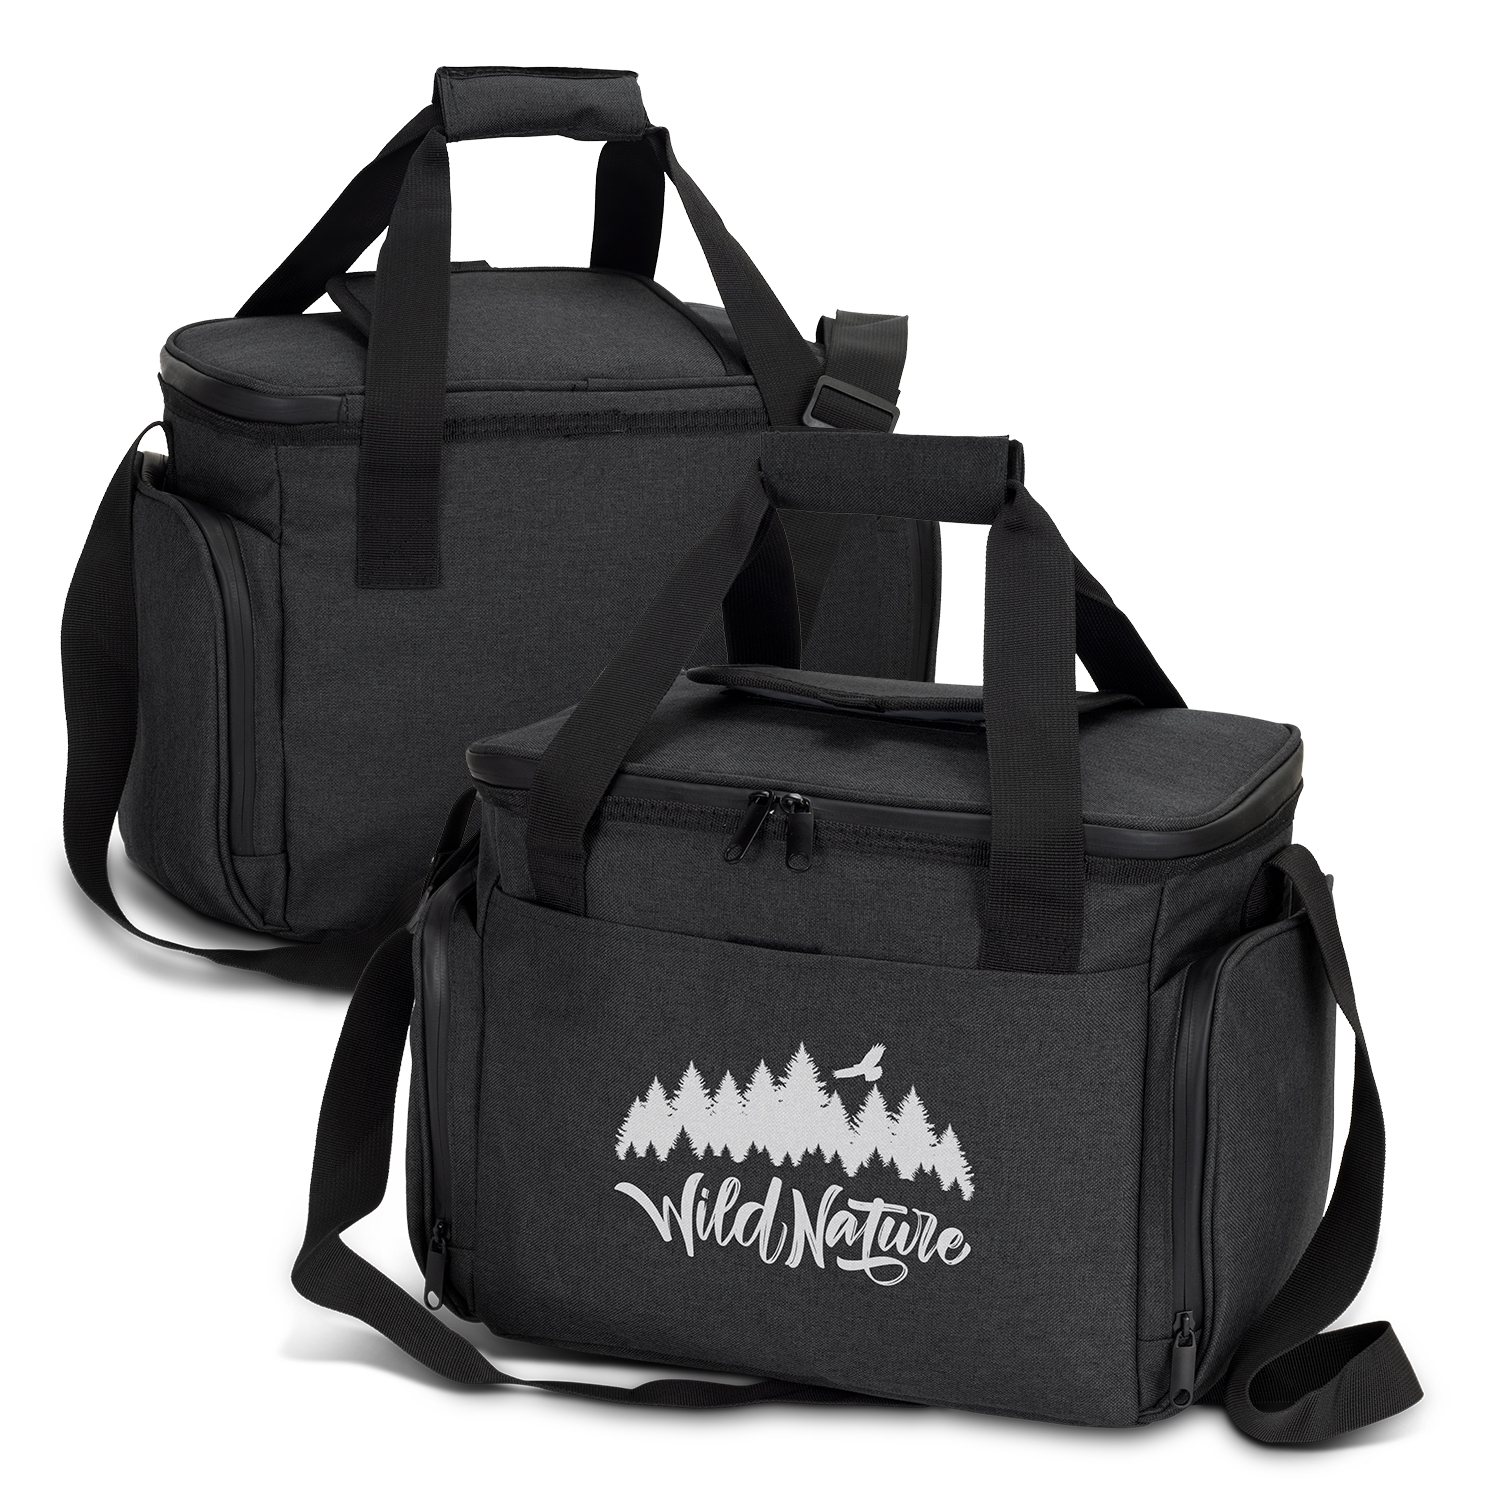 Cooler Bags Ottawa Cooler Bag bag